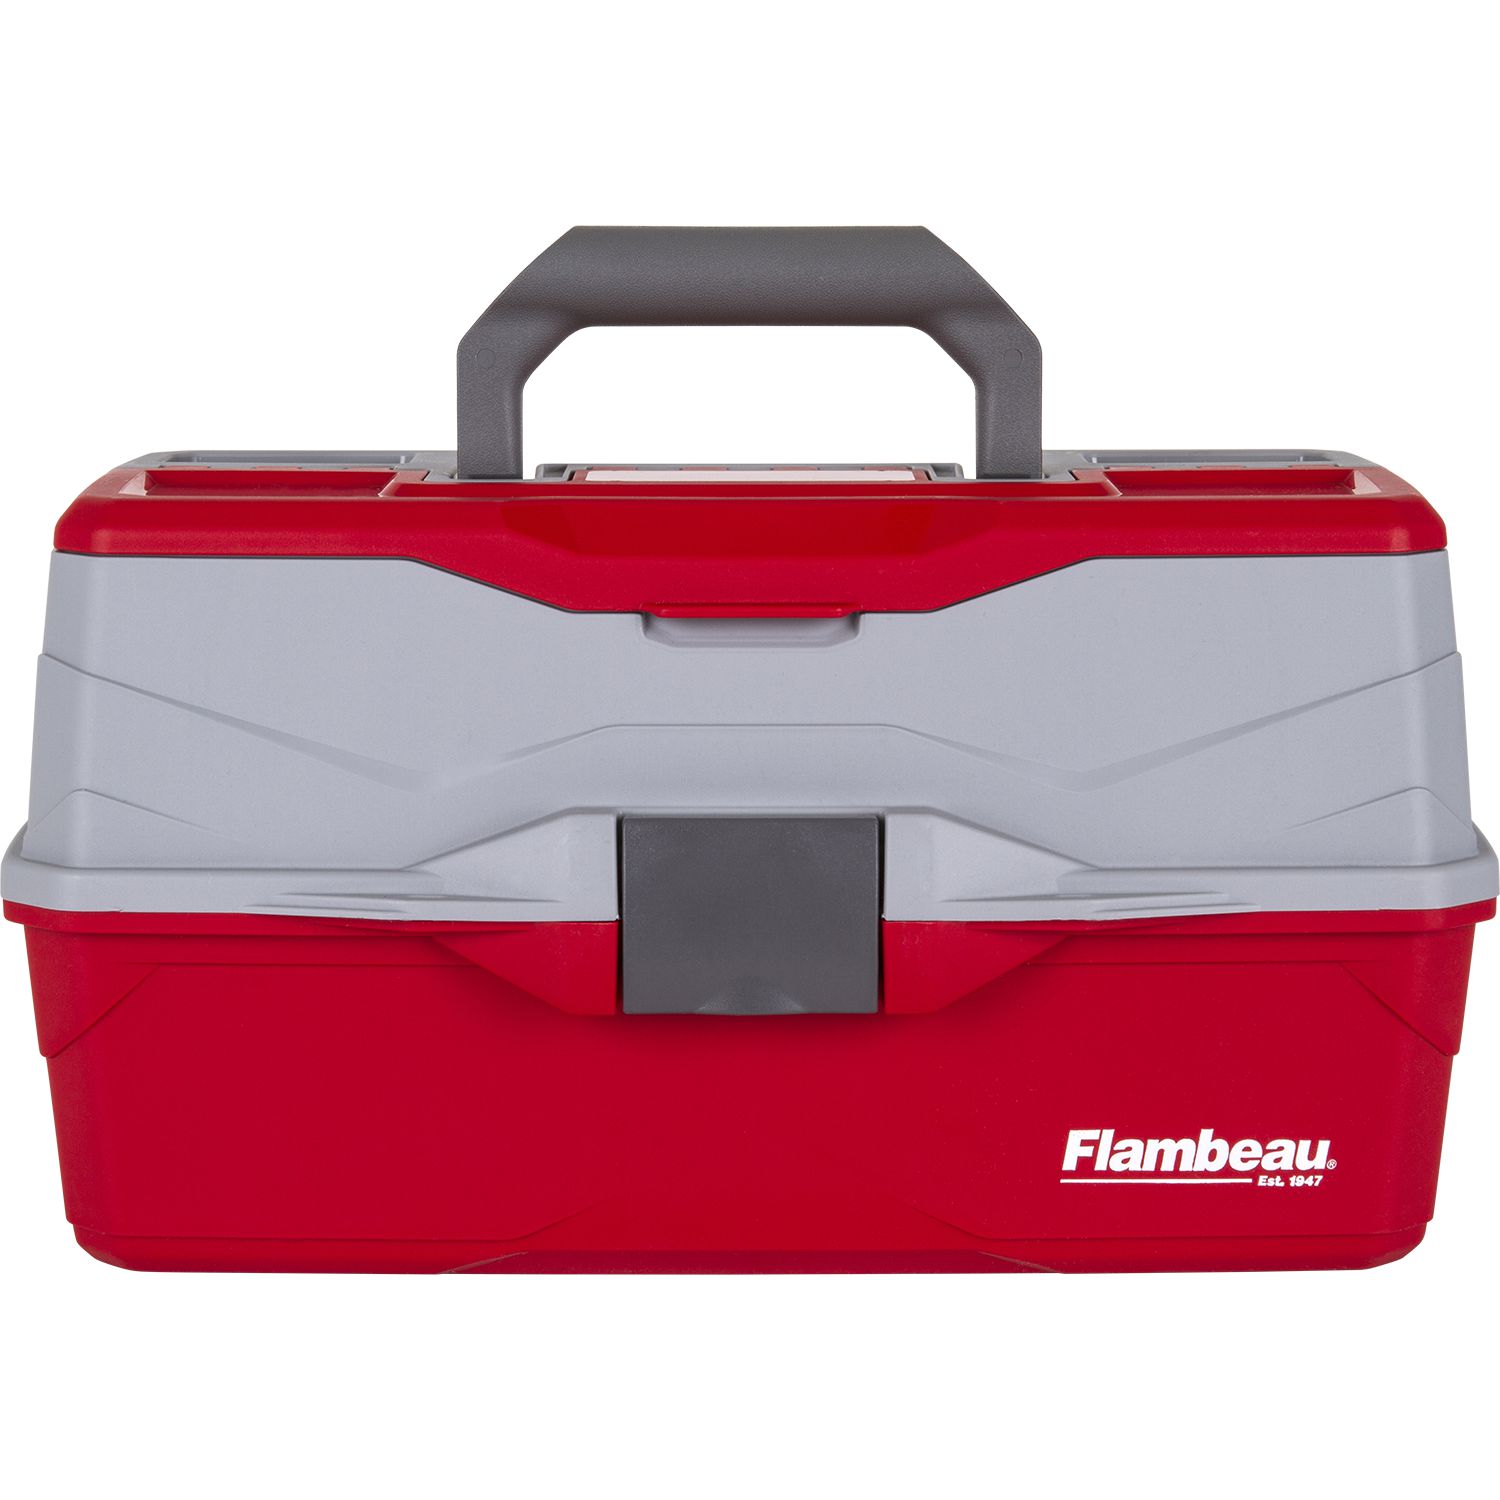 Flambeau Classic Caja de Pesca - Classic 3-Tray Red